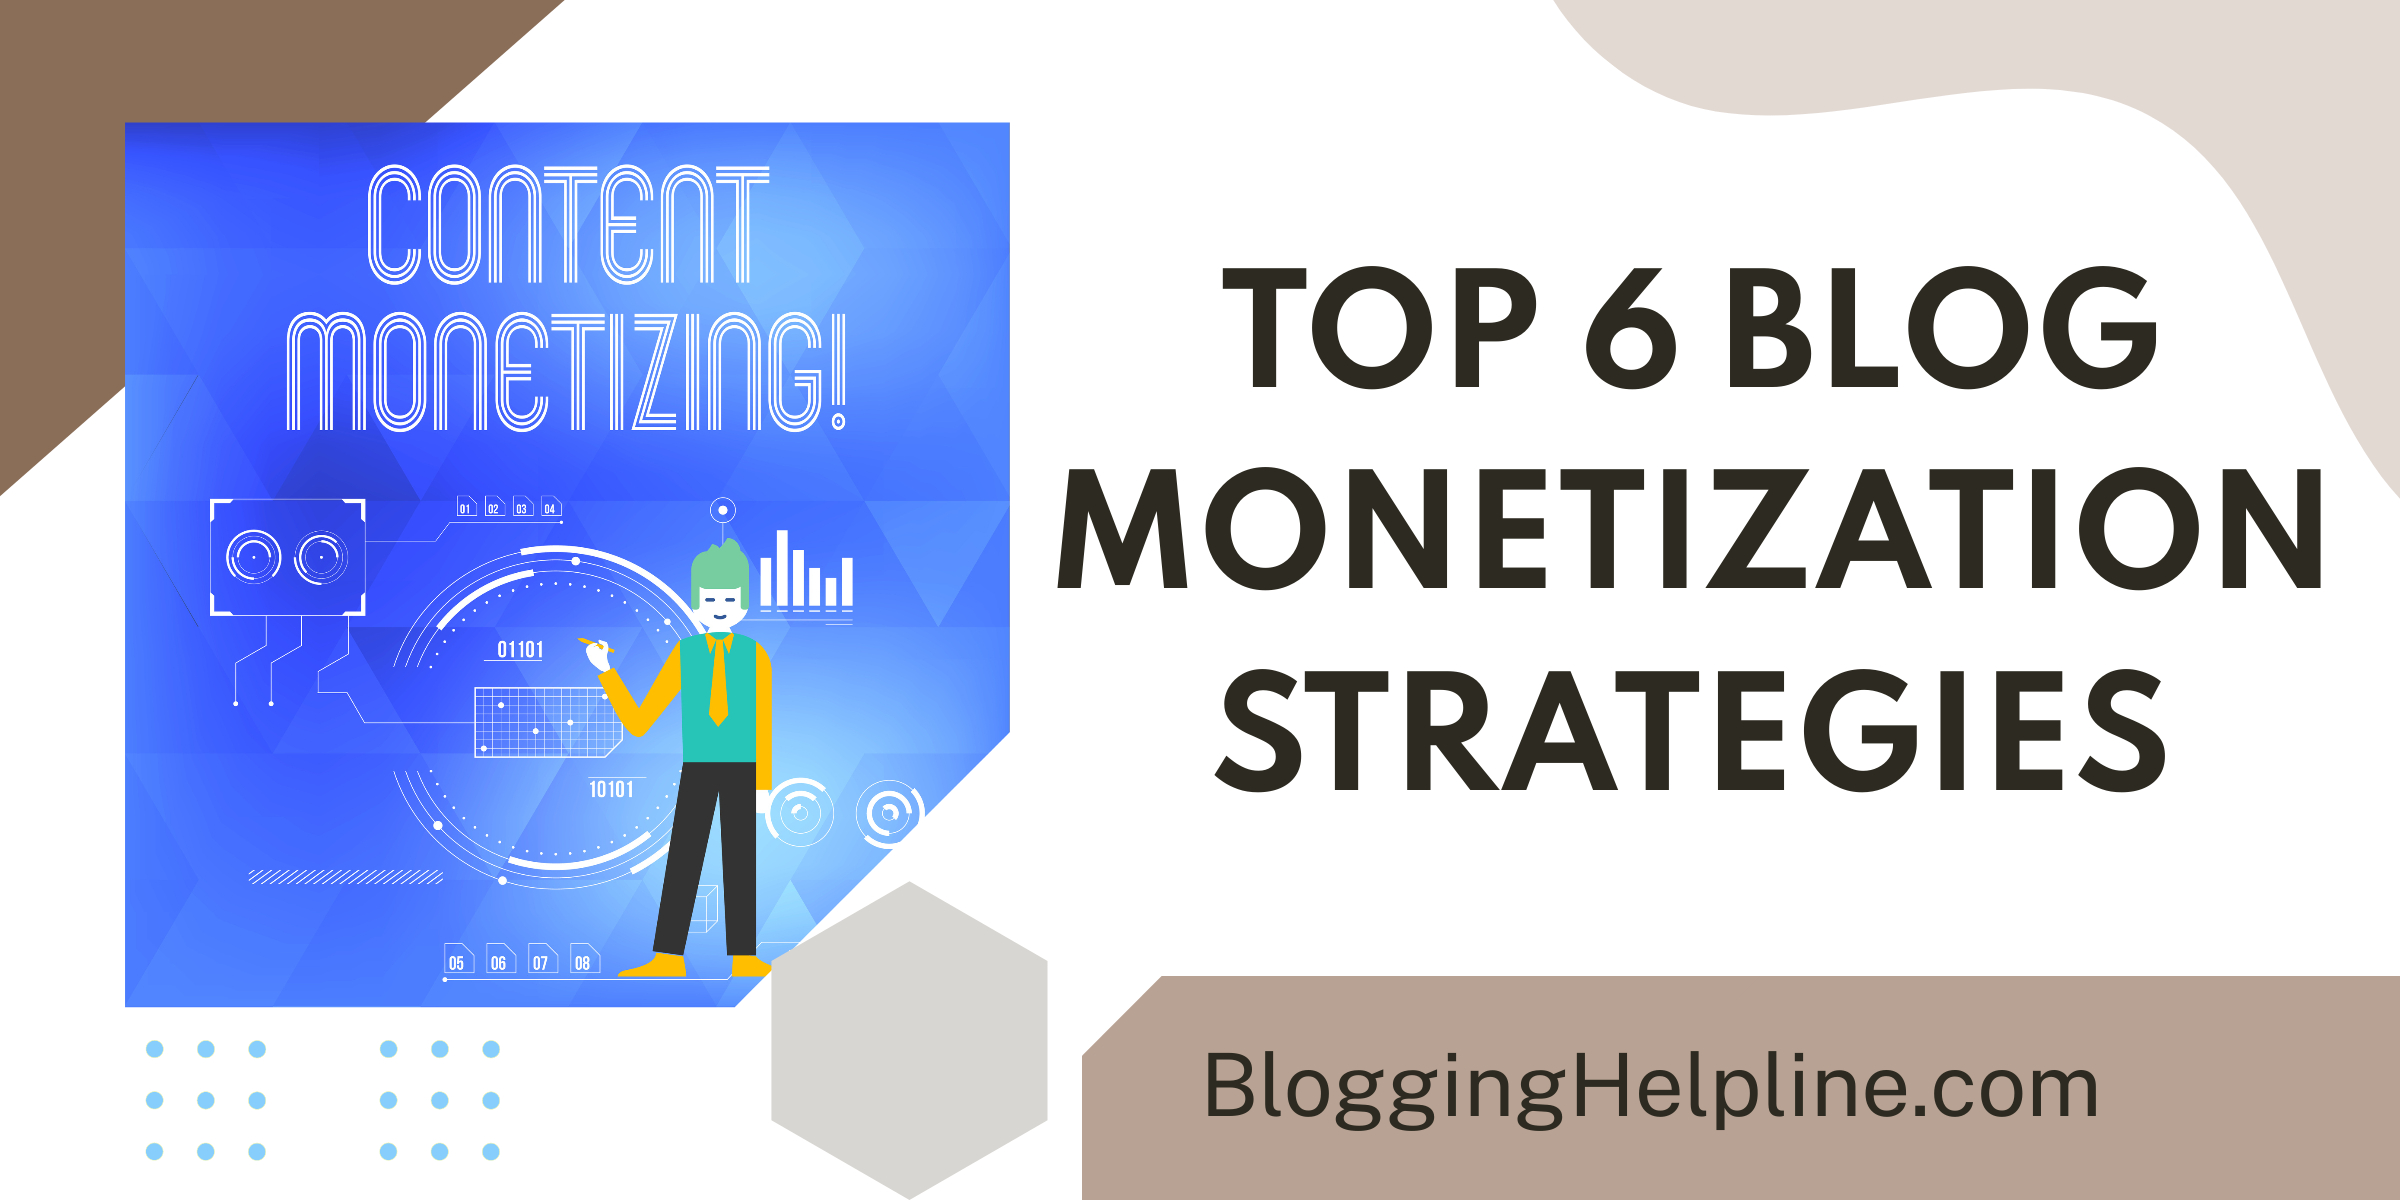 Top 6 Blog Monetization Strategies